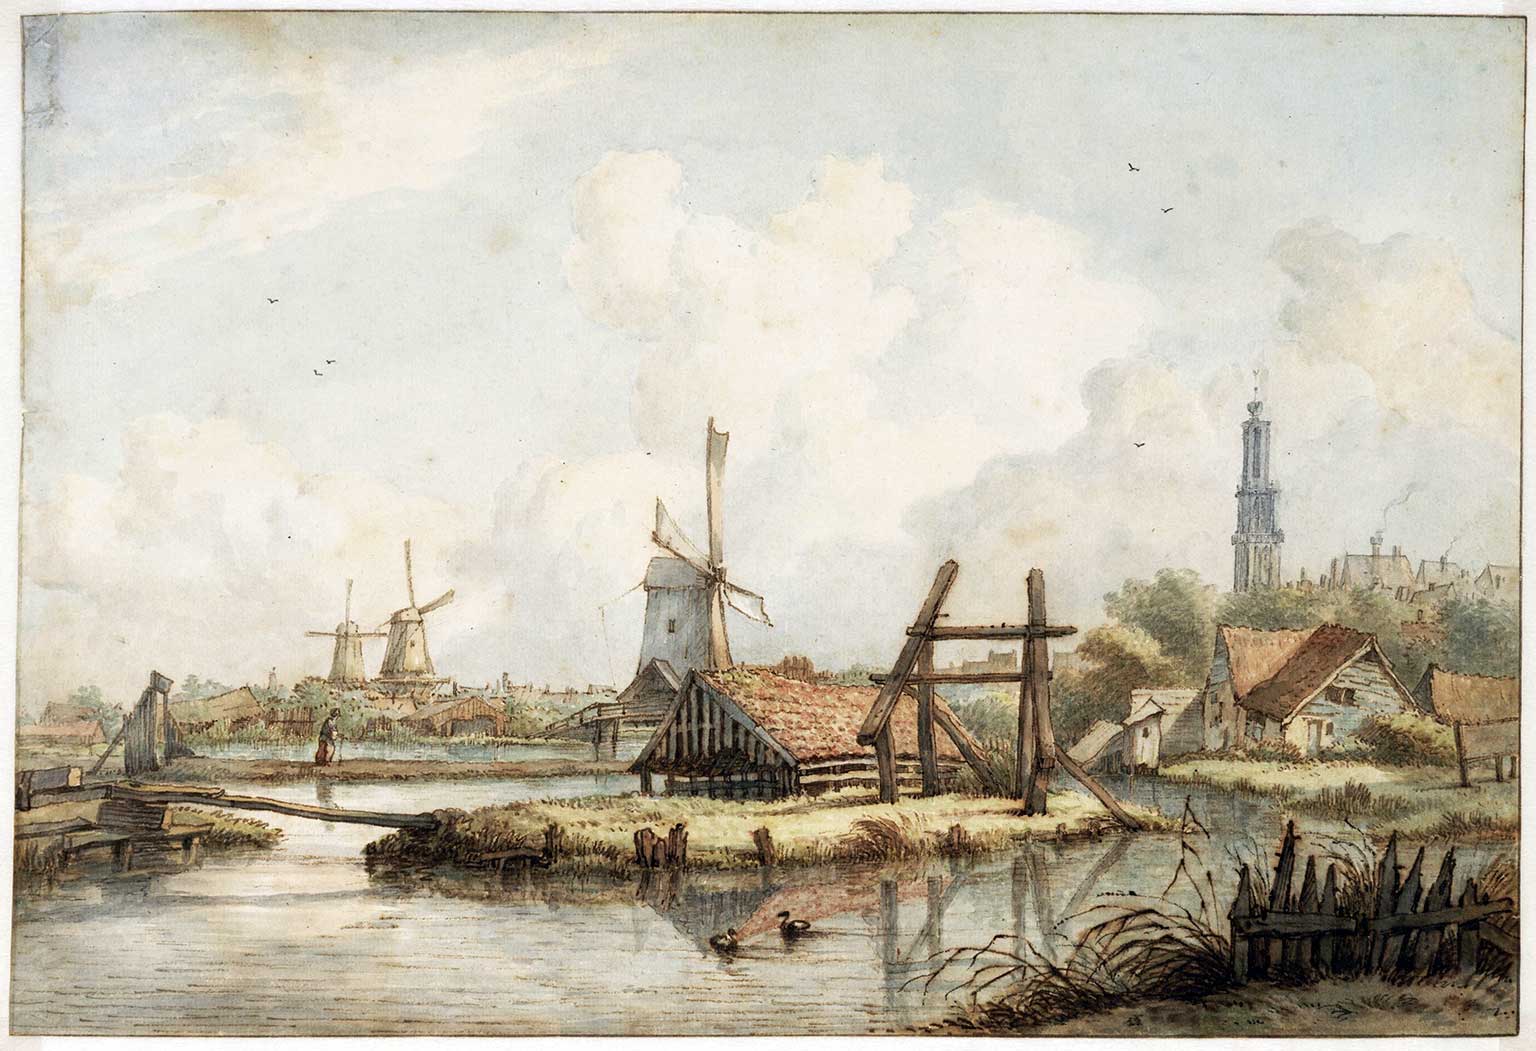 Kwakerspoel, Amsterdam, between 1800 and 1820, drawing by Jan H. Hulswit